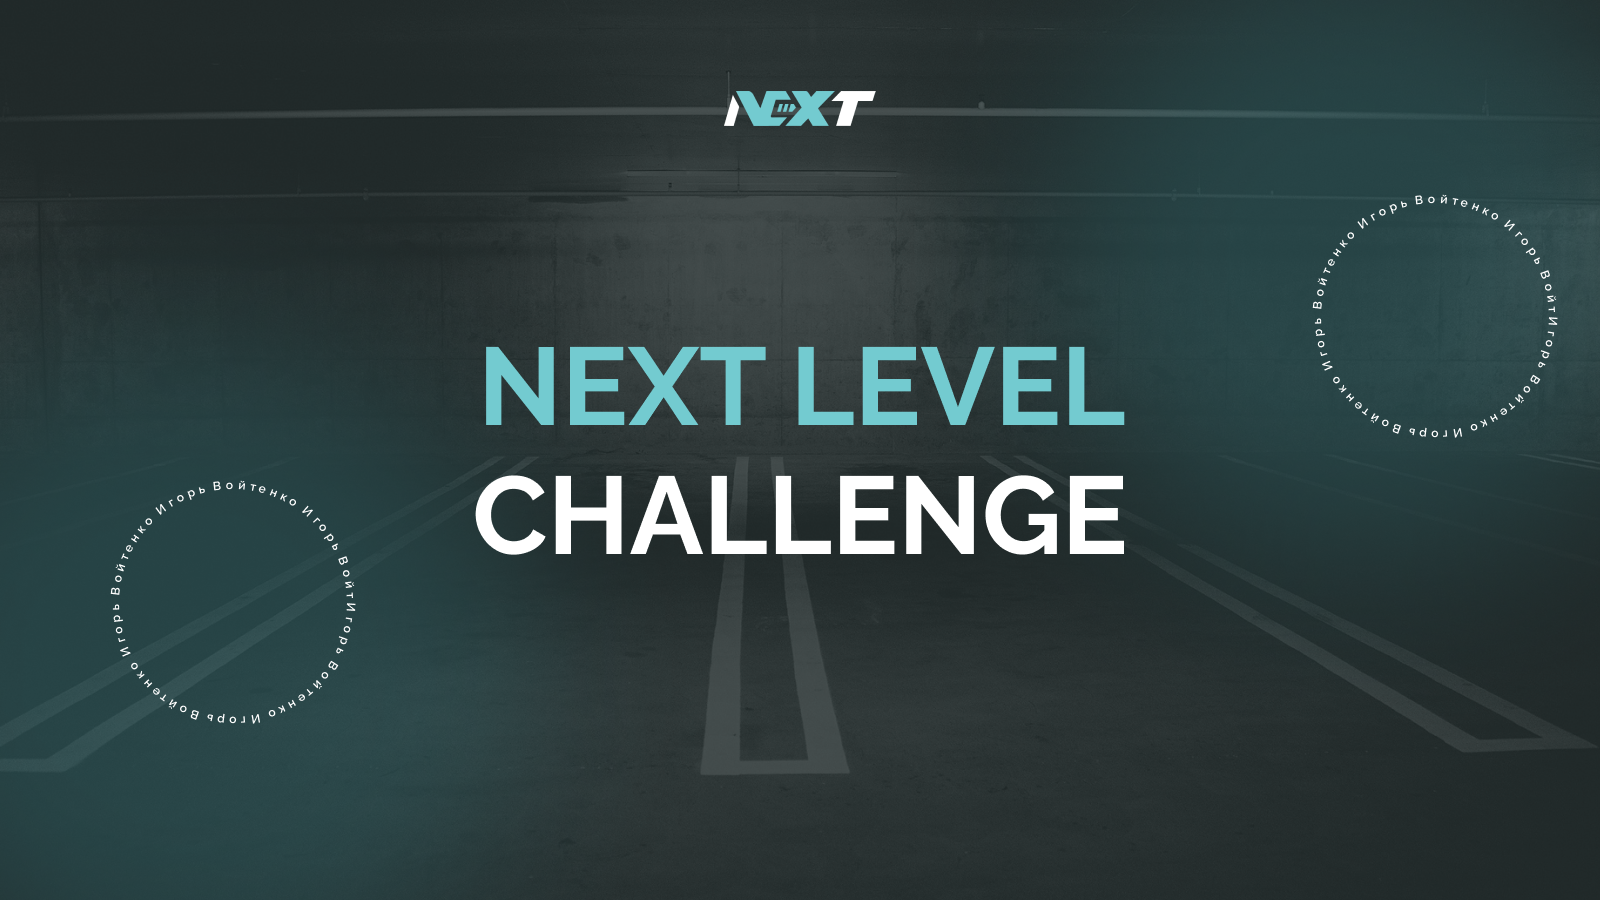 Некст левел. Next Level logo. AGL Challenge.